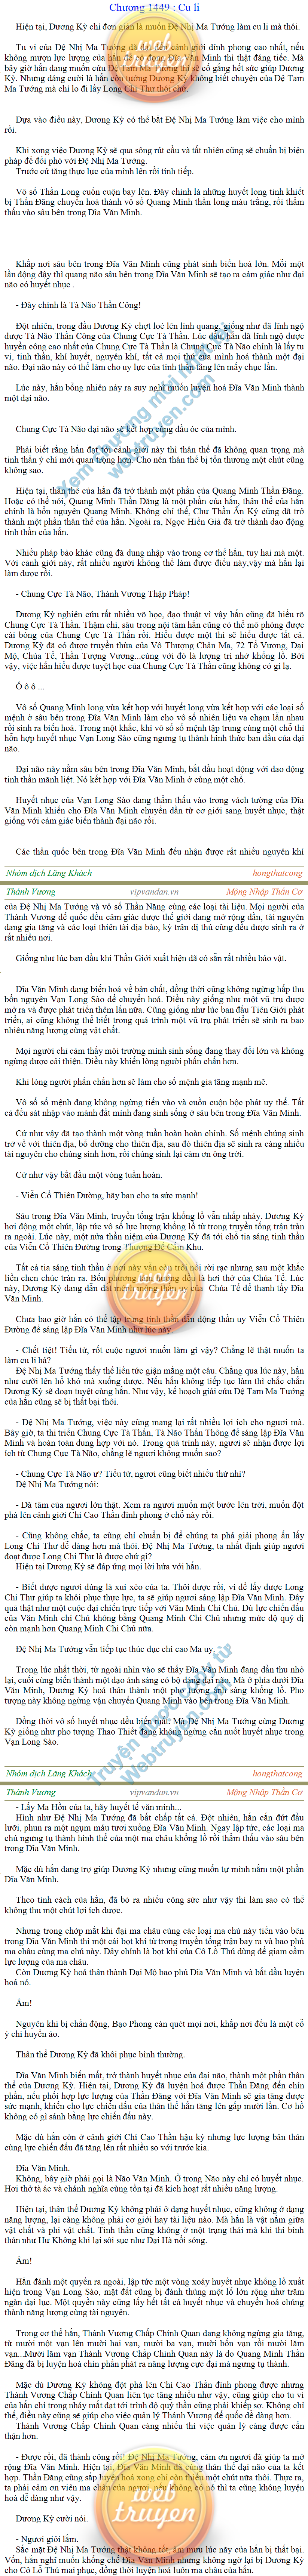 Thanh-vuong-1449.png